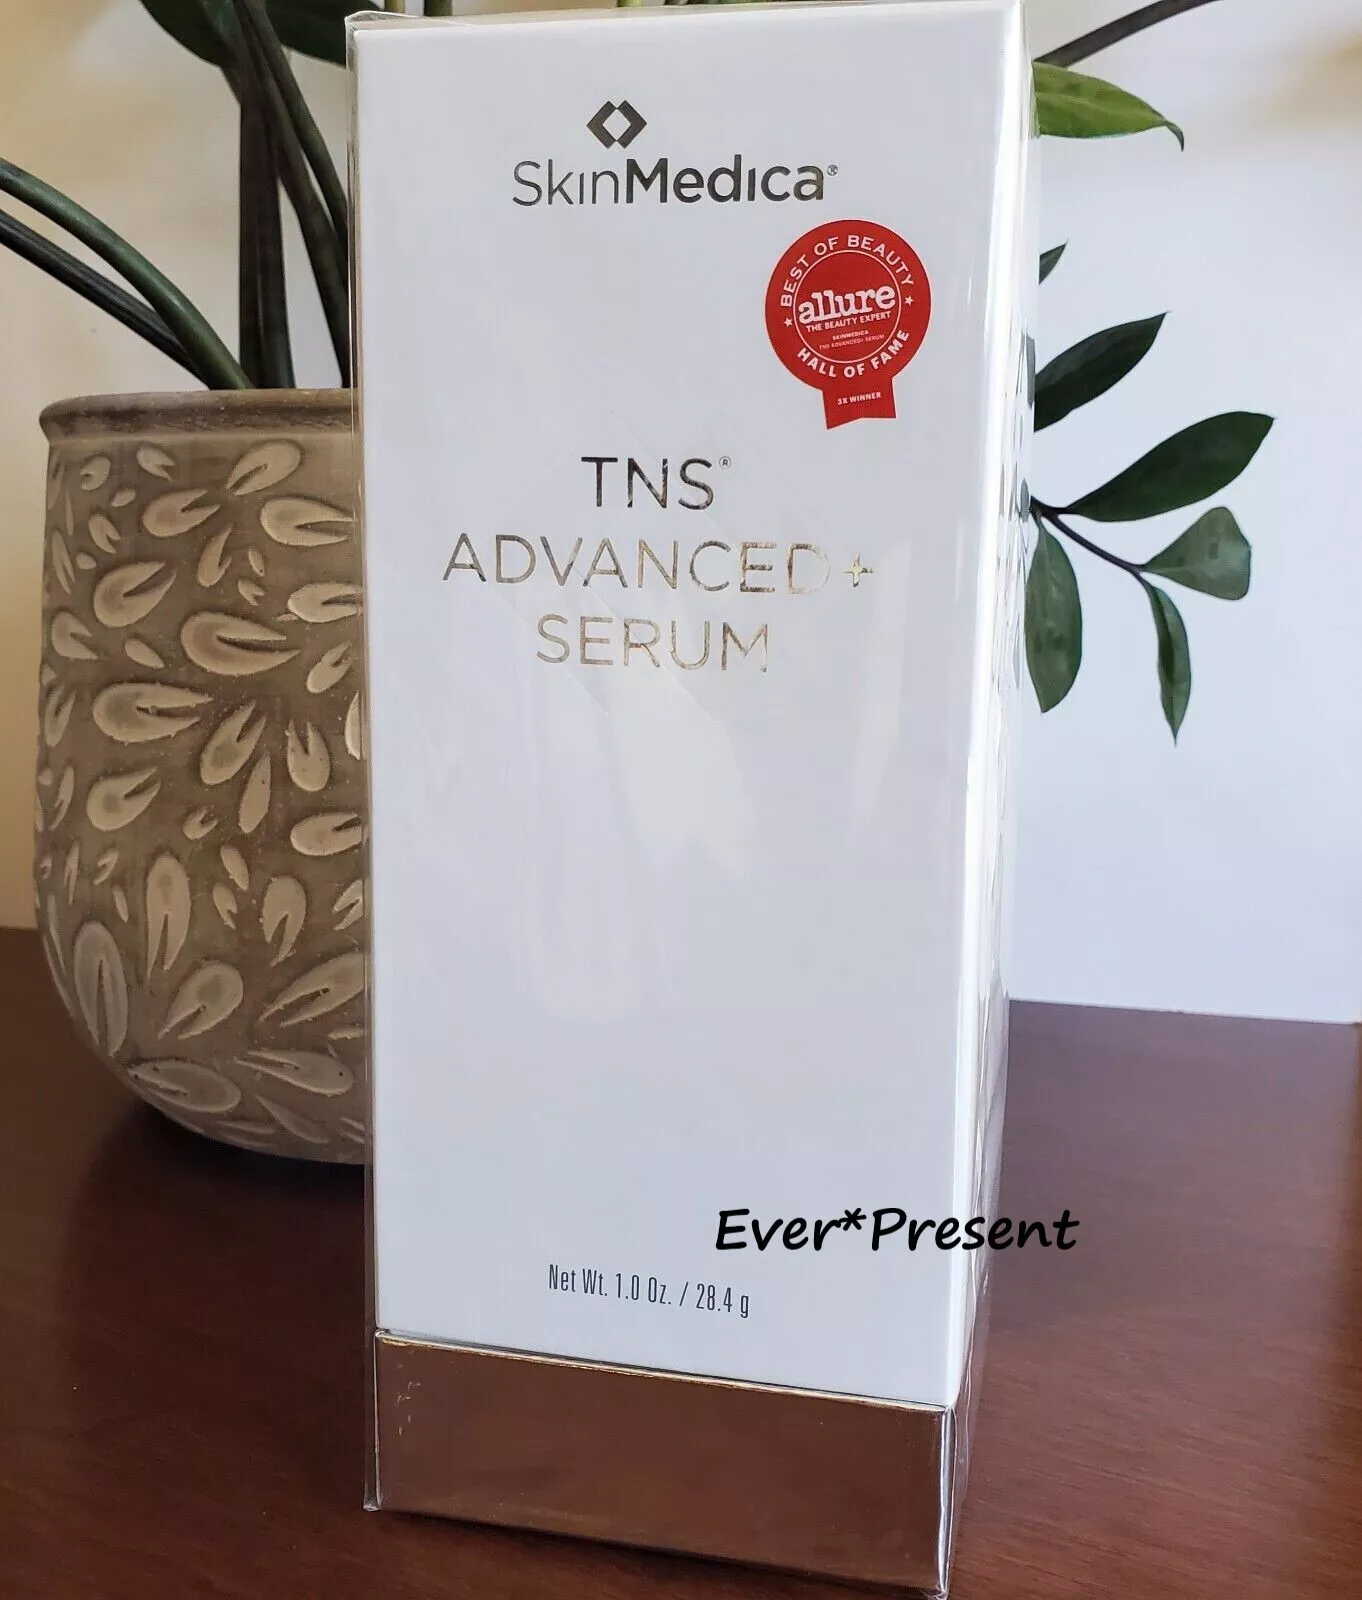 AUTHENTIC! SkinMedica TNS Advanced+ Serum Net wt. 1.0 oz / 28.4 g Sealed in Box  - $164.88